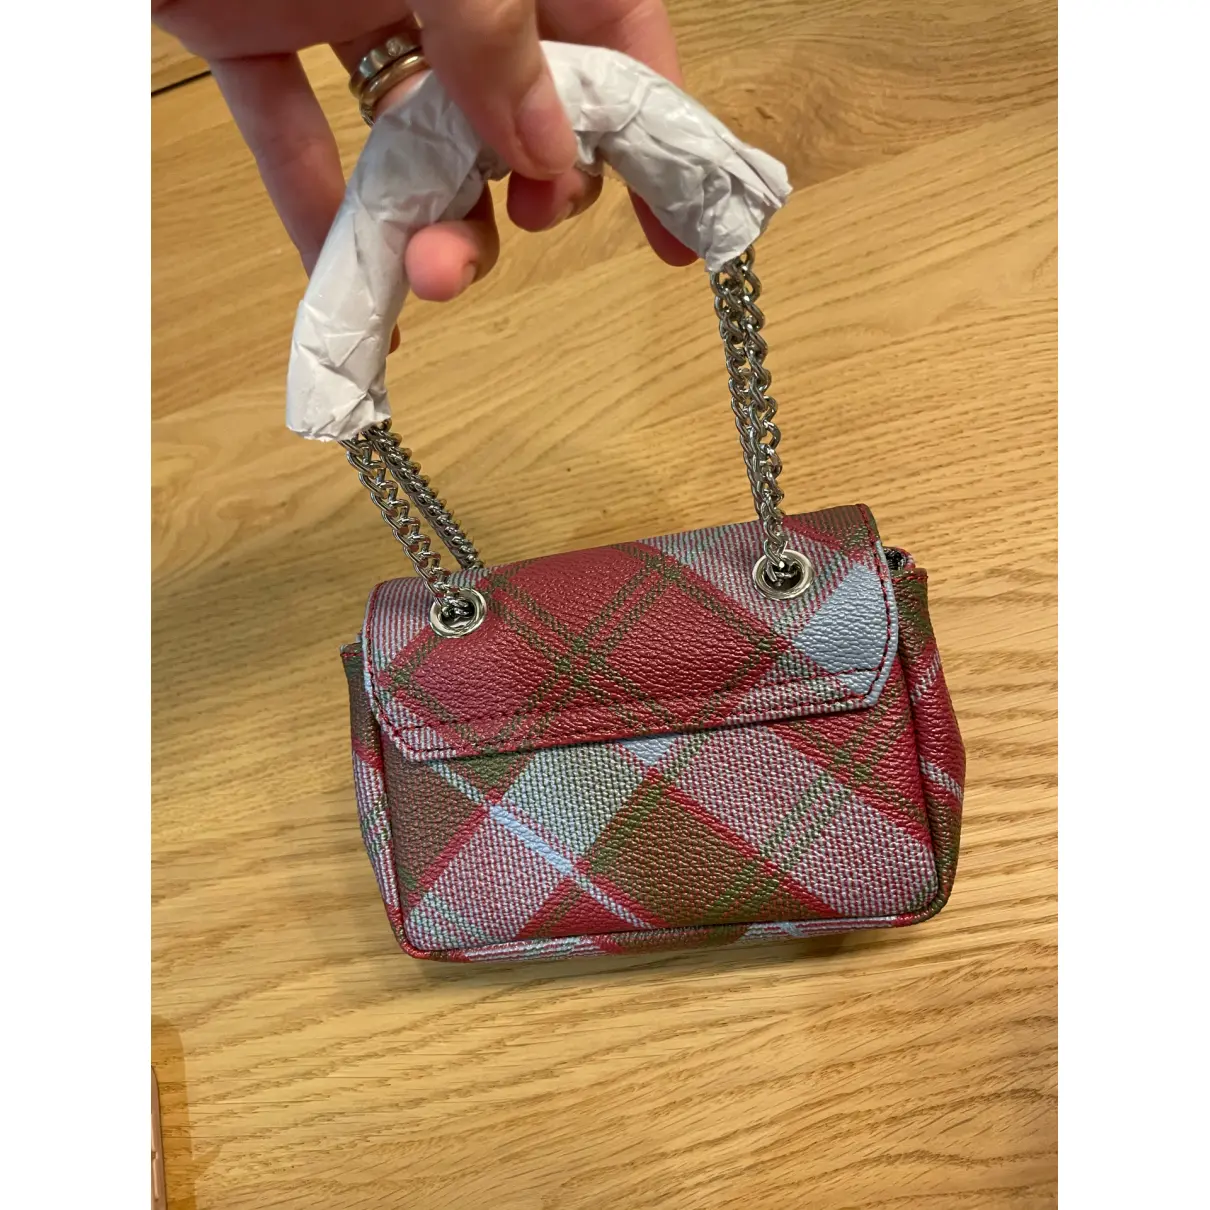 Buy Vivienne Westwood Leather mini bag online